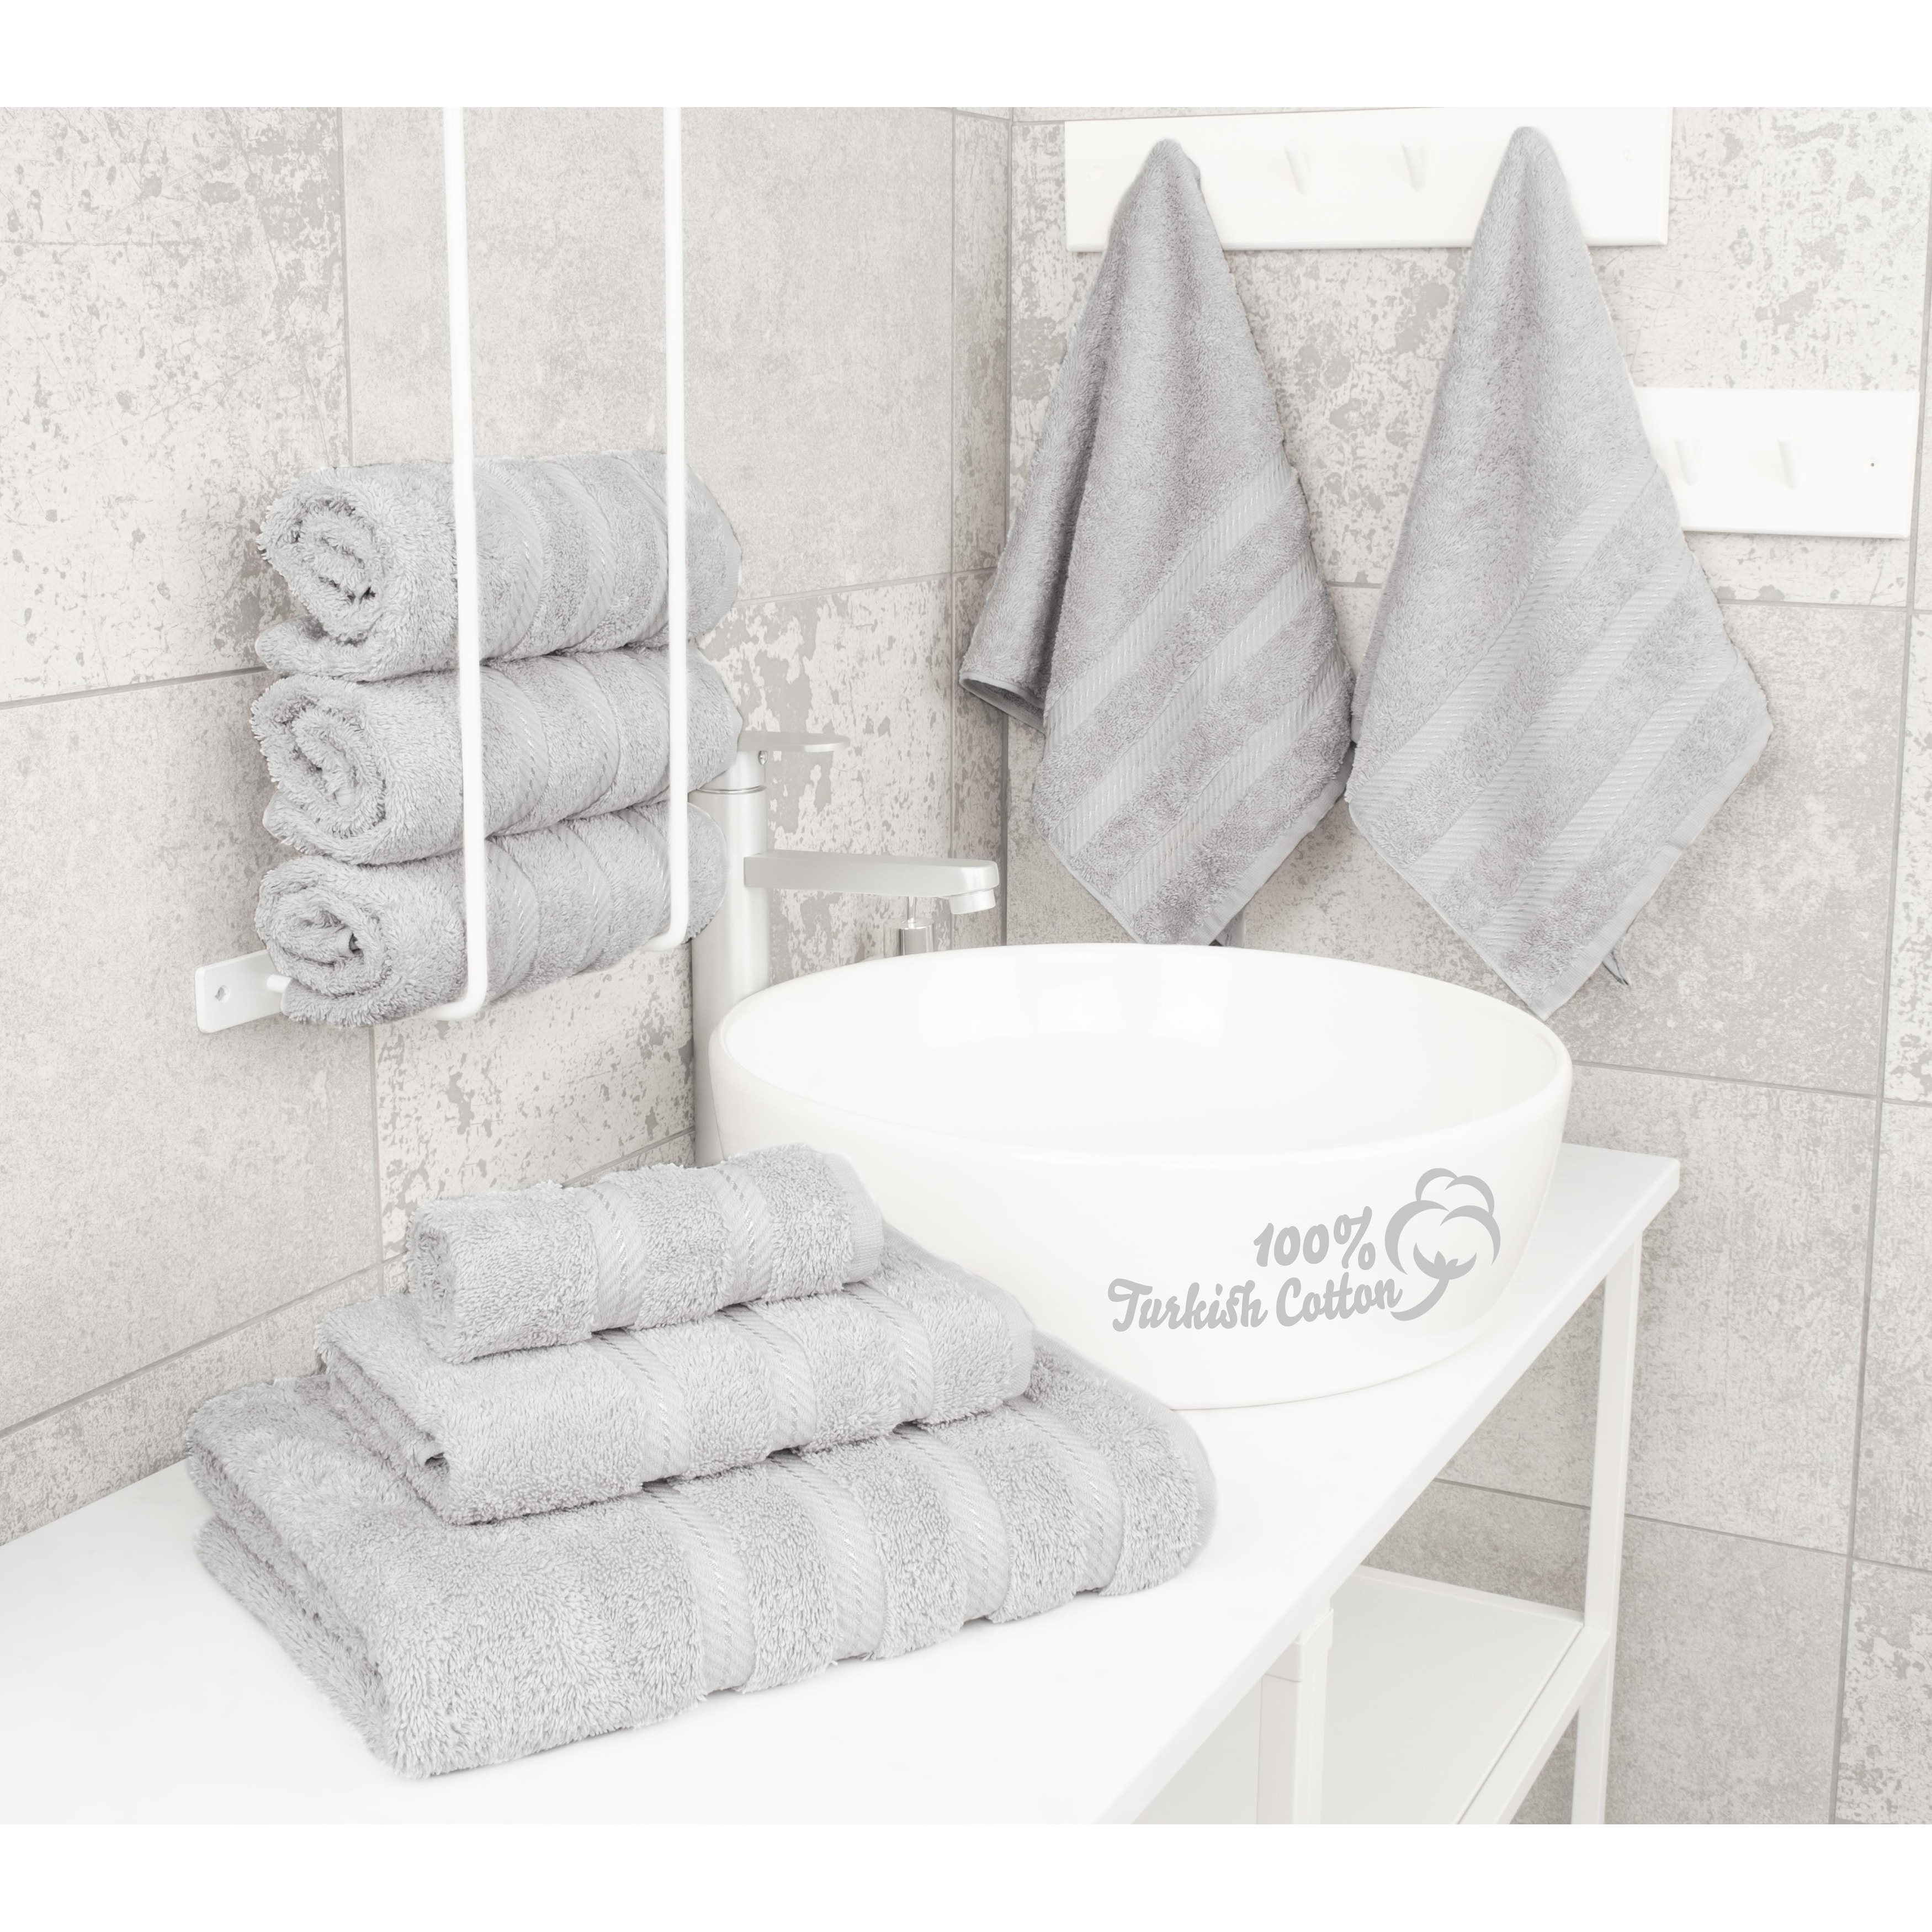 https://ak1.ostkcdn.com/images/products/is/images/direct/4f57365cd09b357171c1dcb6025624d9e95b75b5/American-Soft-Linen-6-Piece-Turkish-Cotton-Bath-Towel-Set.jpg